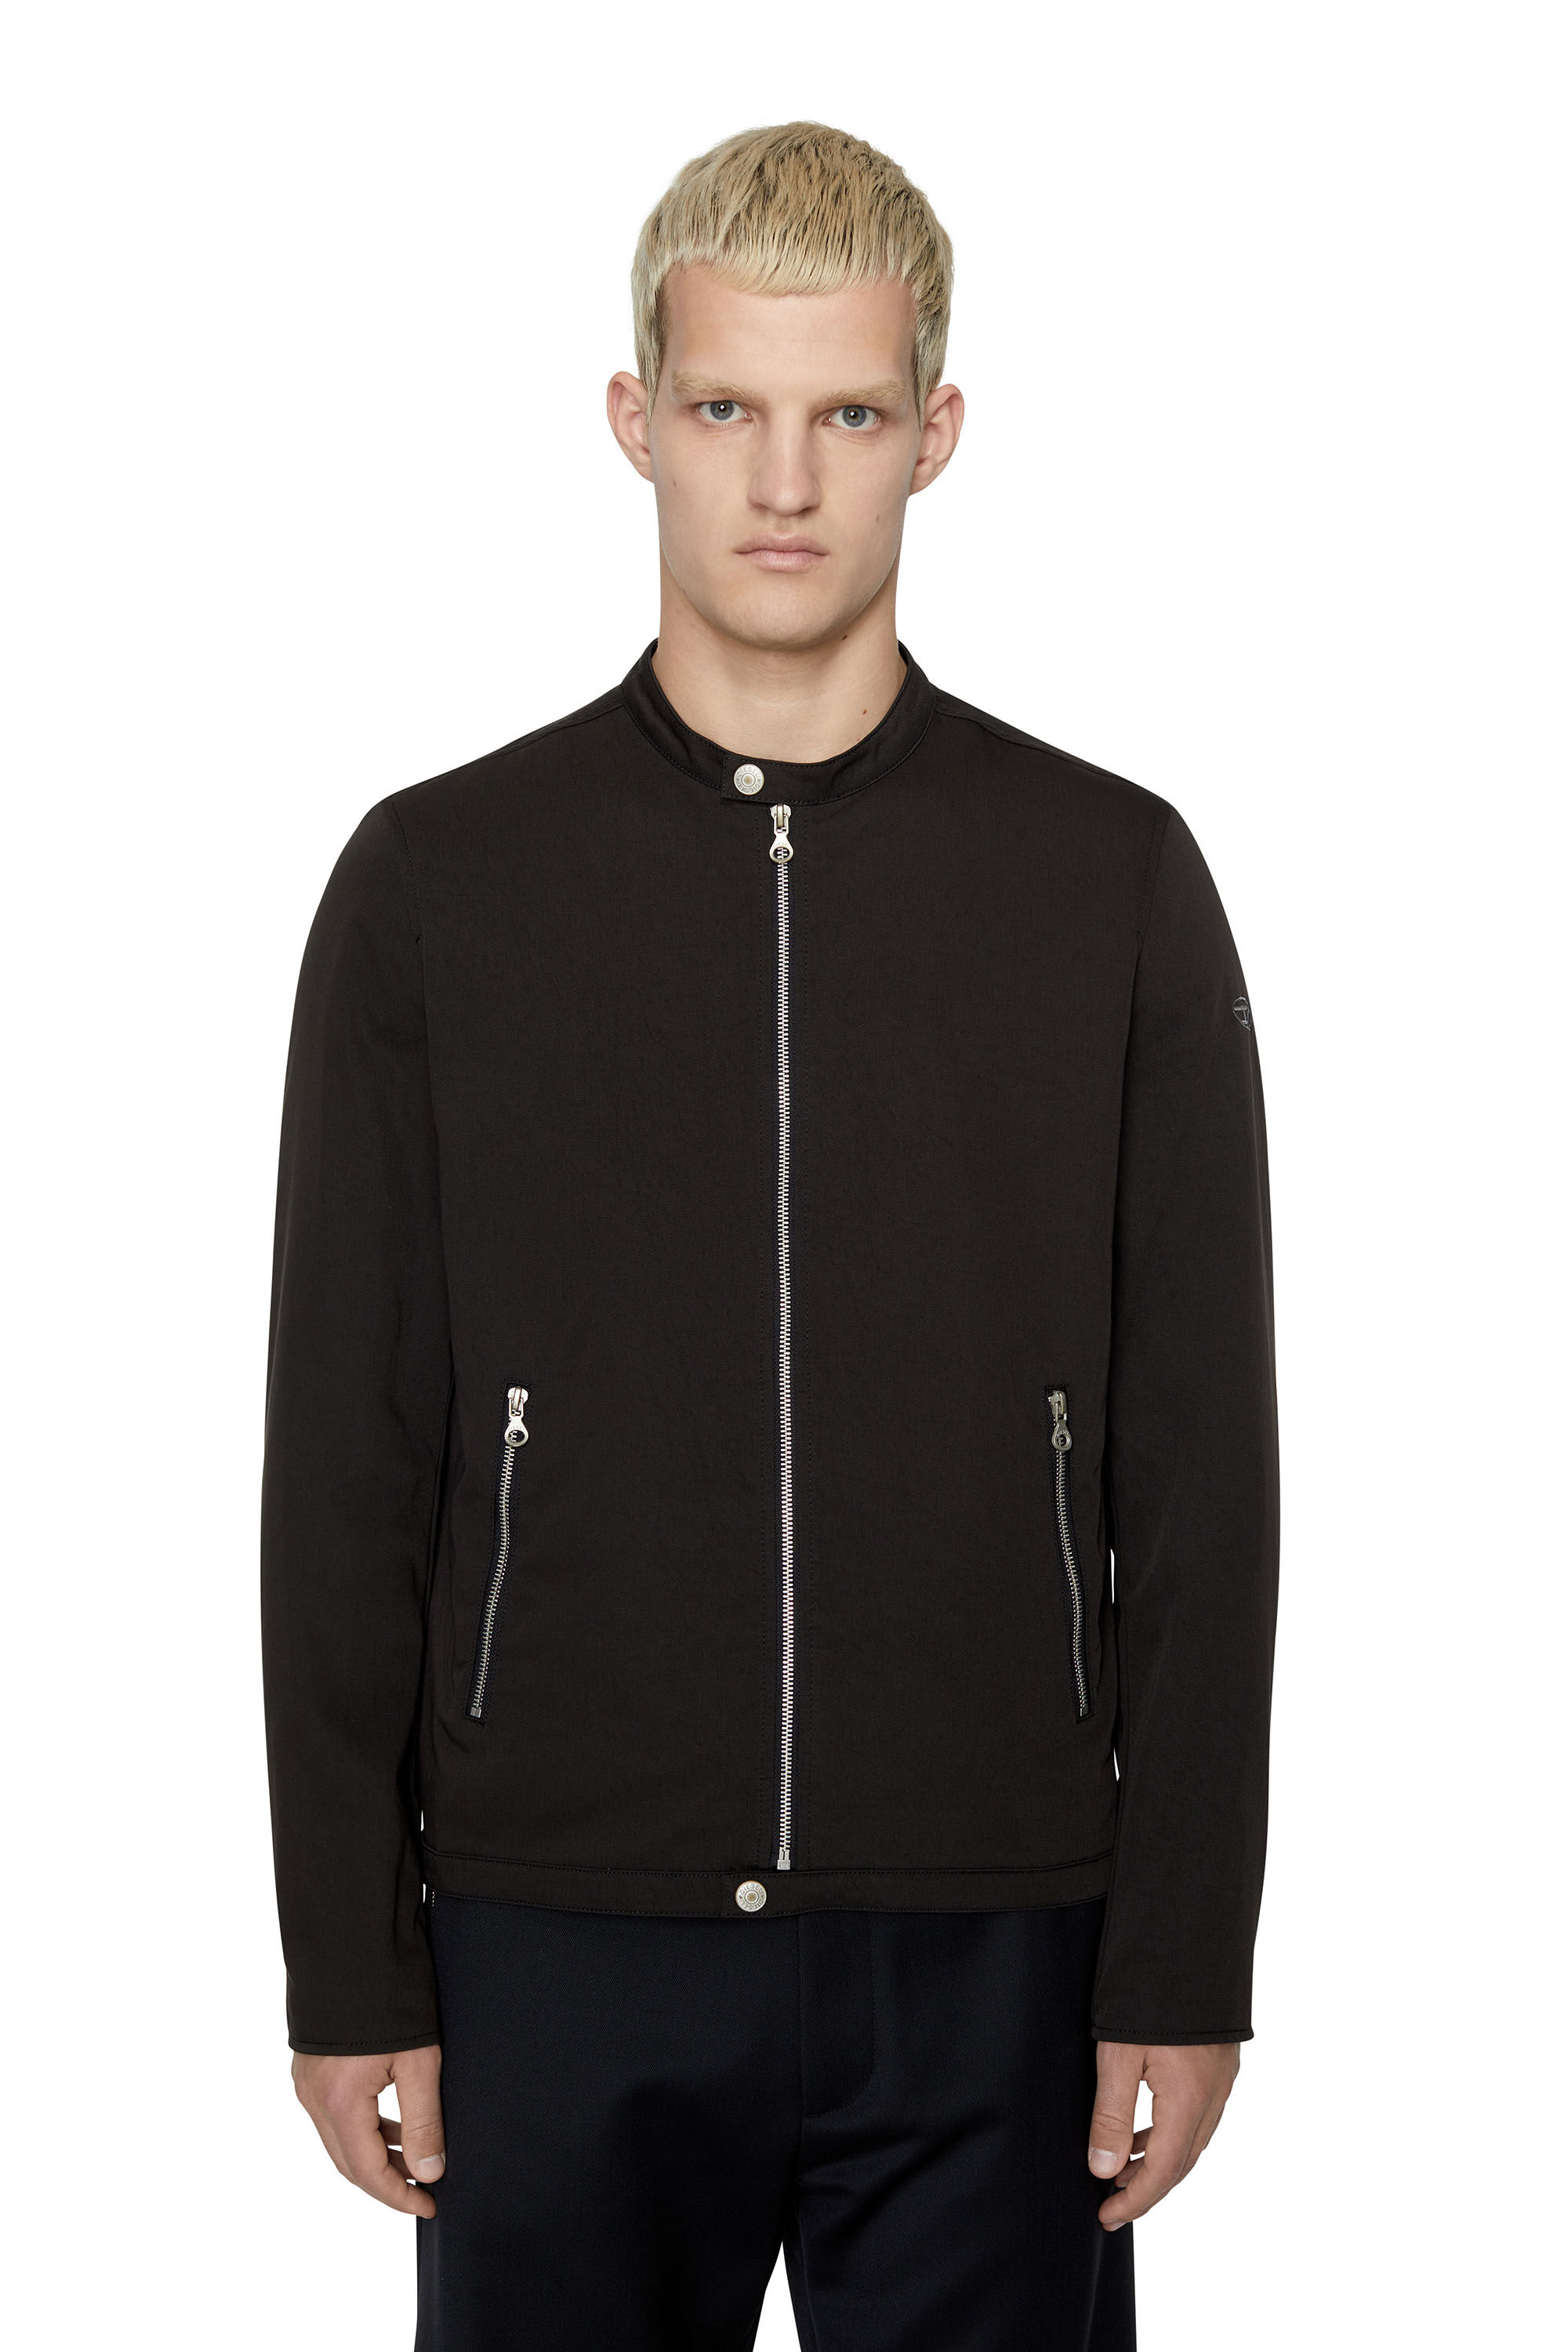 Diesel - J-GLORY-NW, Man Biker jacket in cotton-touch nylon in Black - Image 3